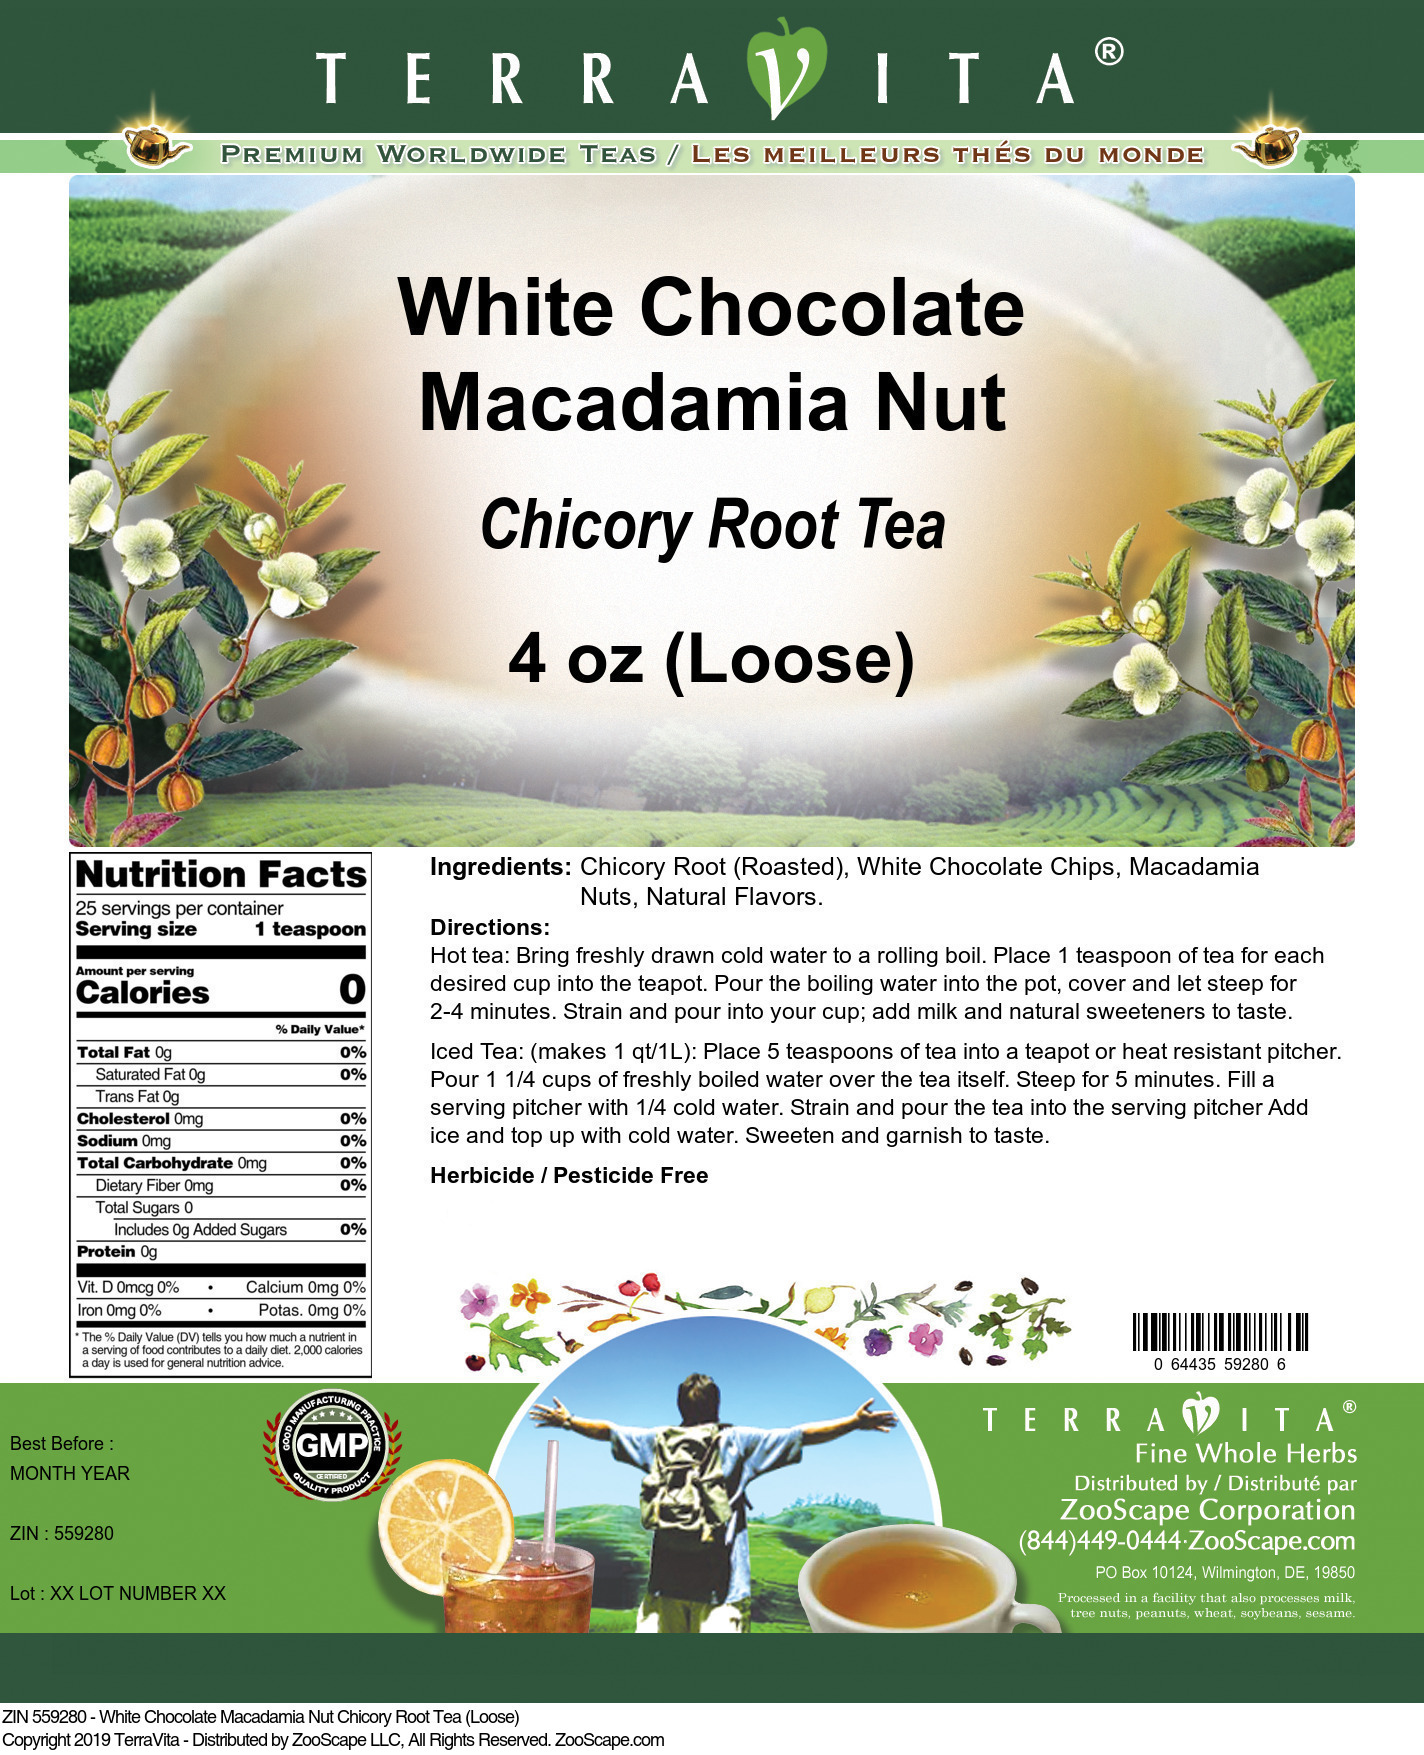 White Chocolate Macadamia Nut Chicory Root Tea (Loose) - Label